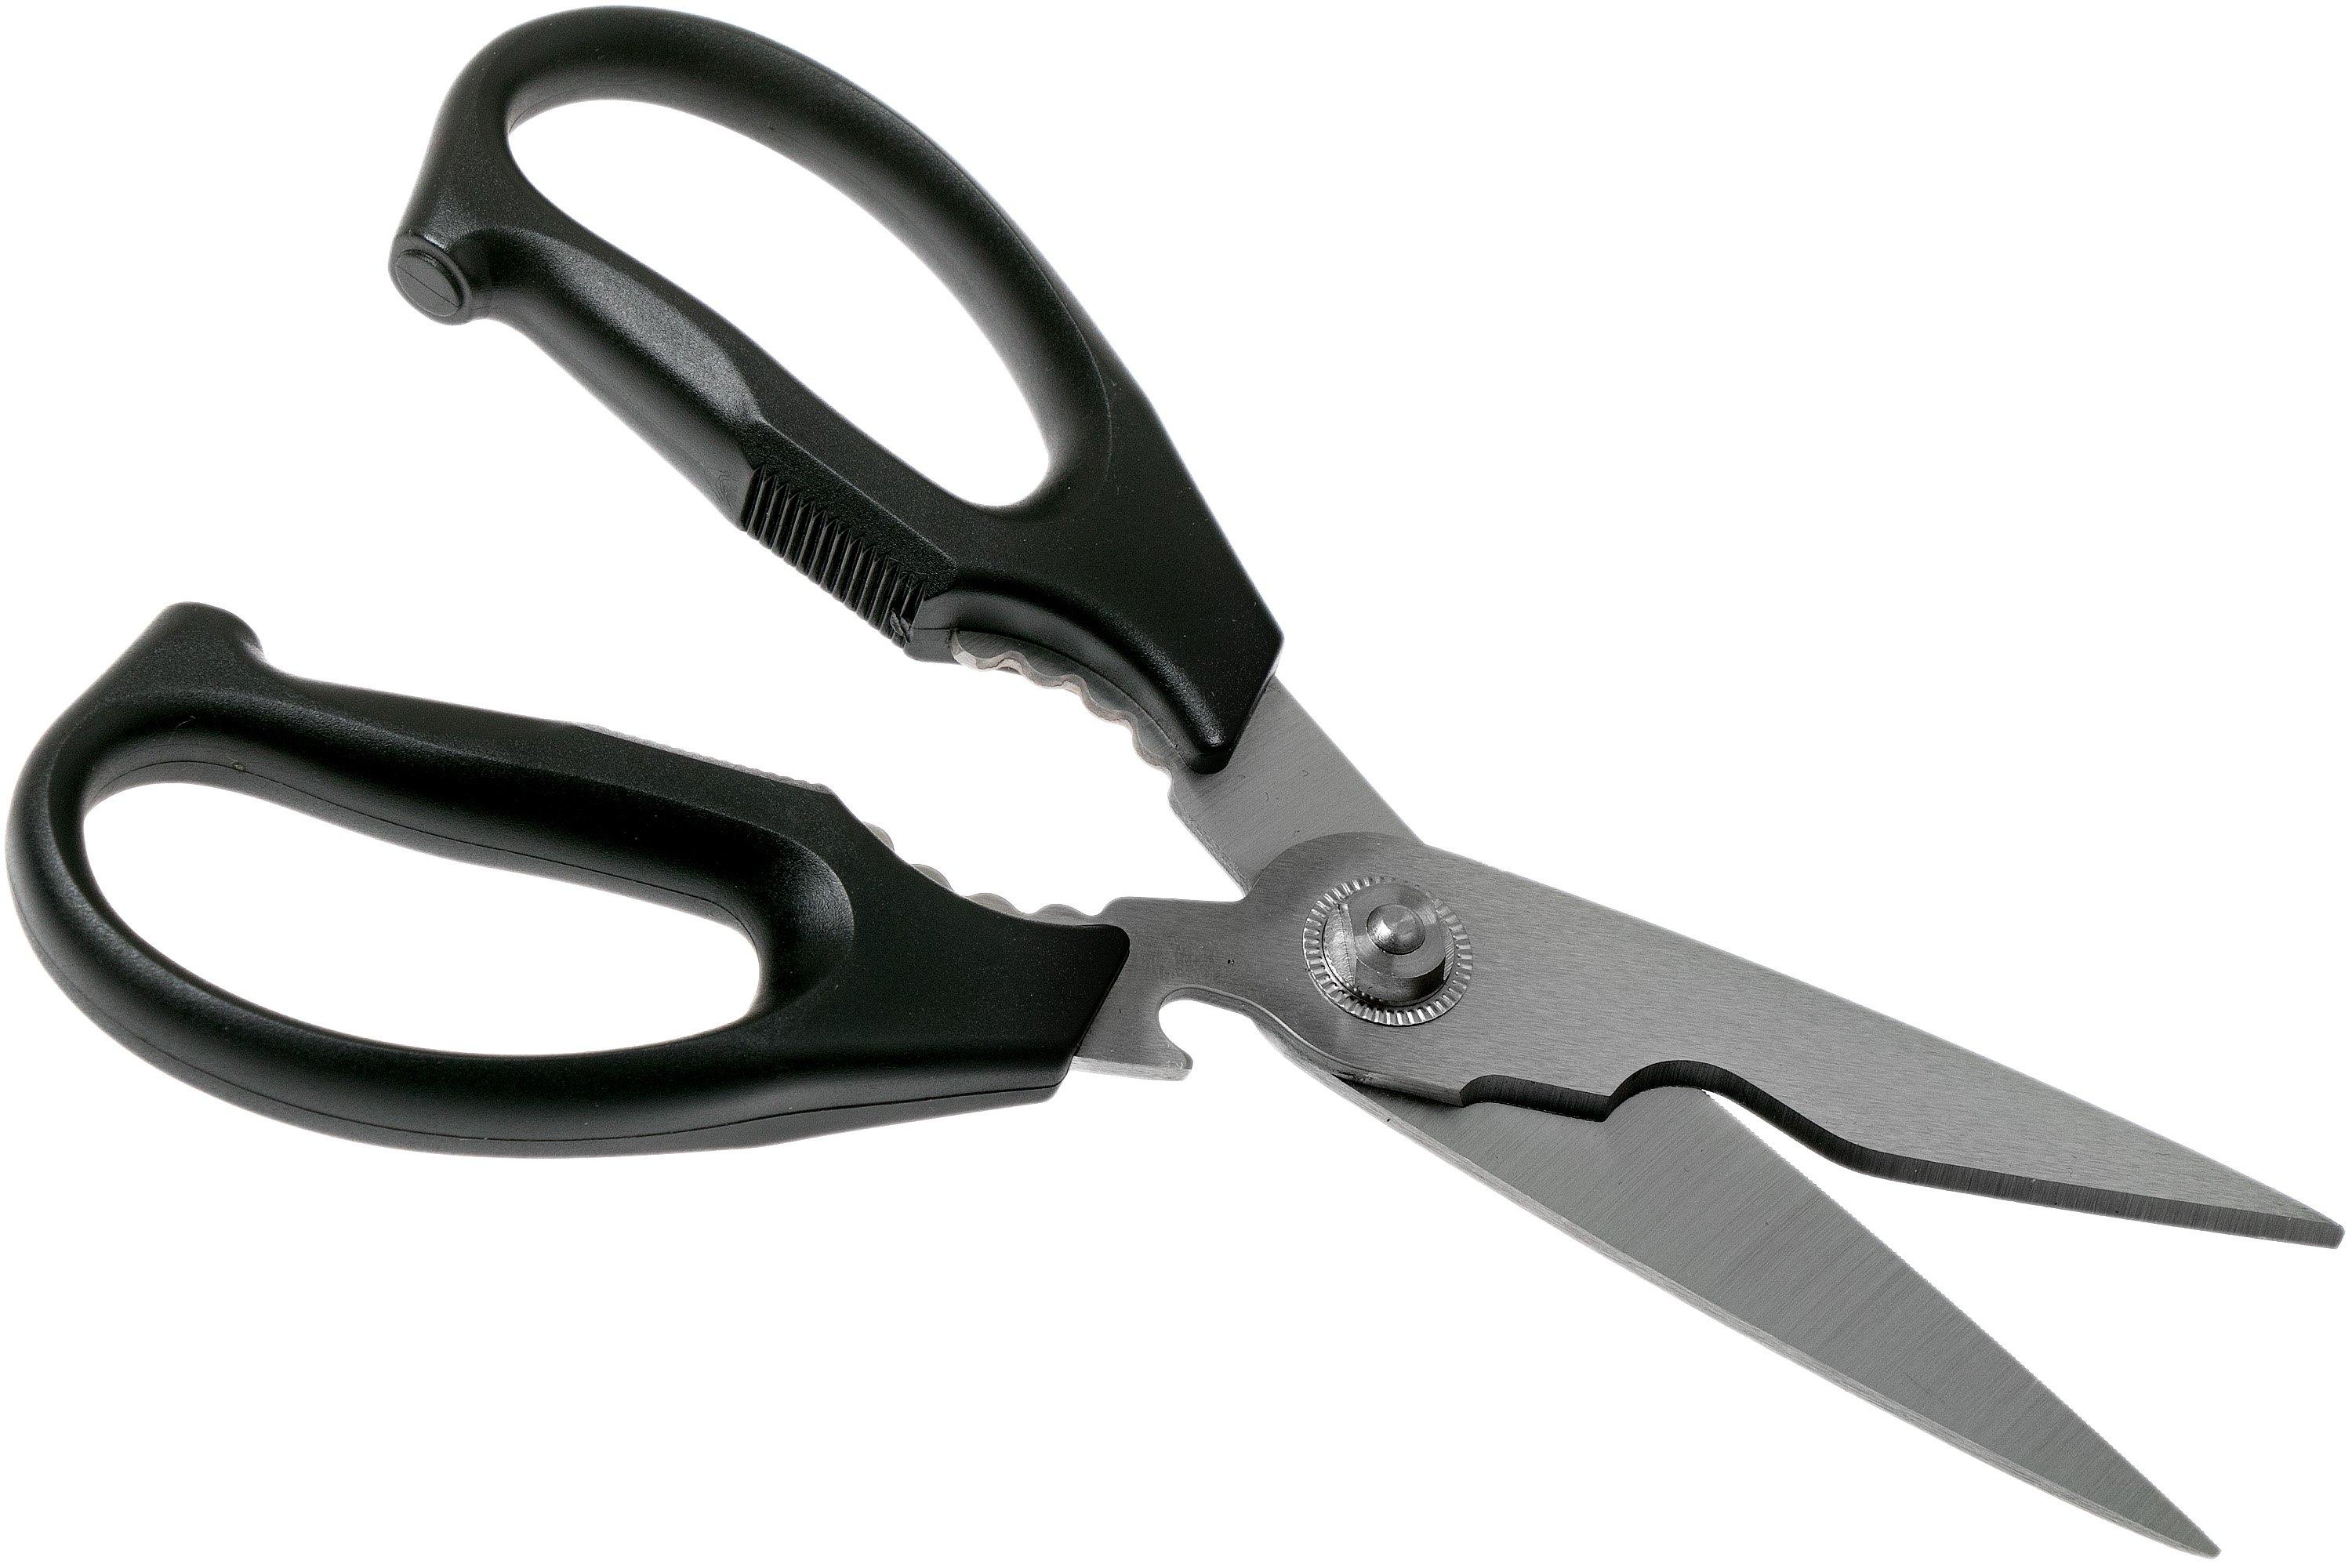 Due Cigni kitchen scissors, 2C968-8  Advantageously shopping at